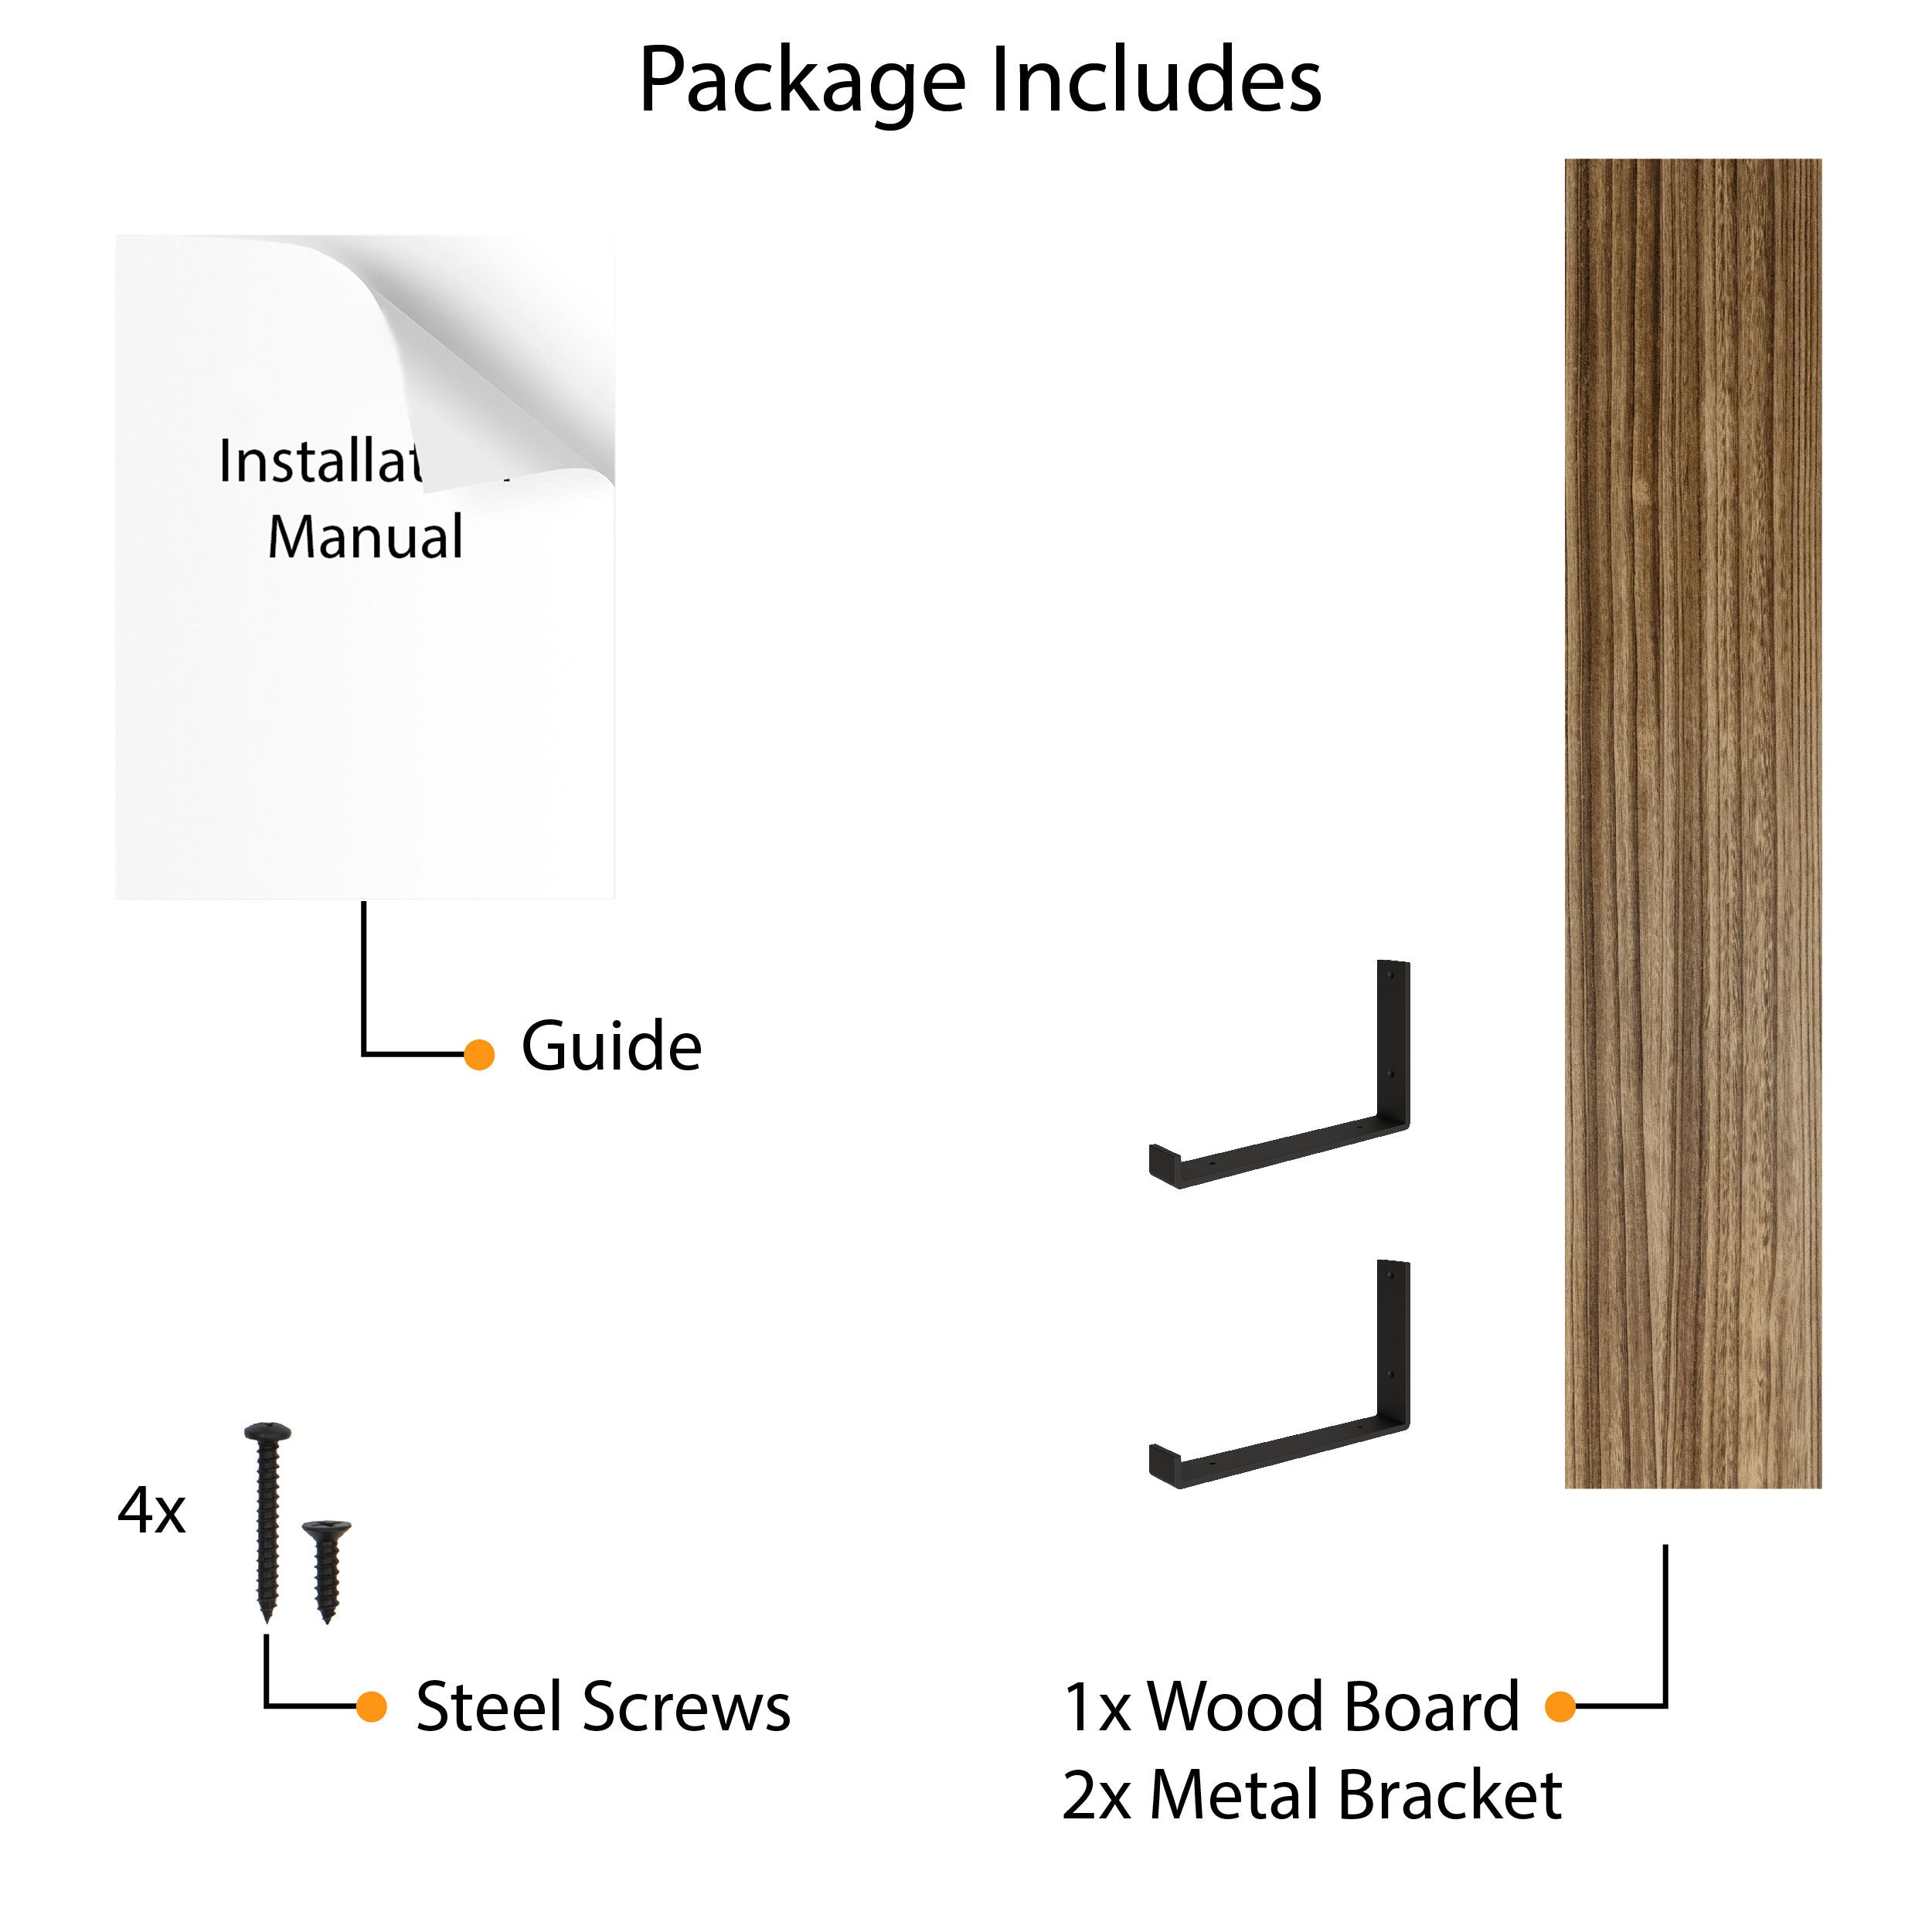 Burnt floating shelf contents: manual, wood board, brackets, screws.